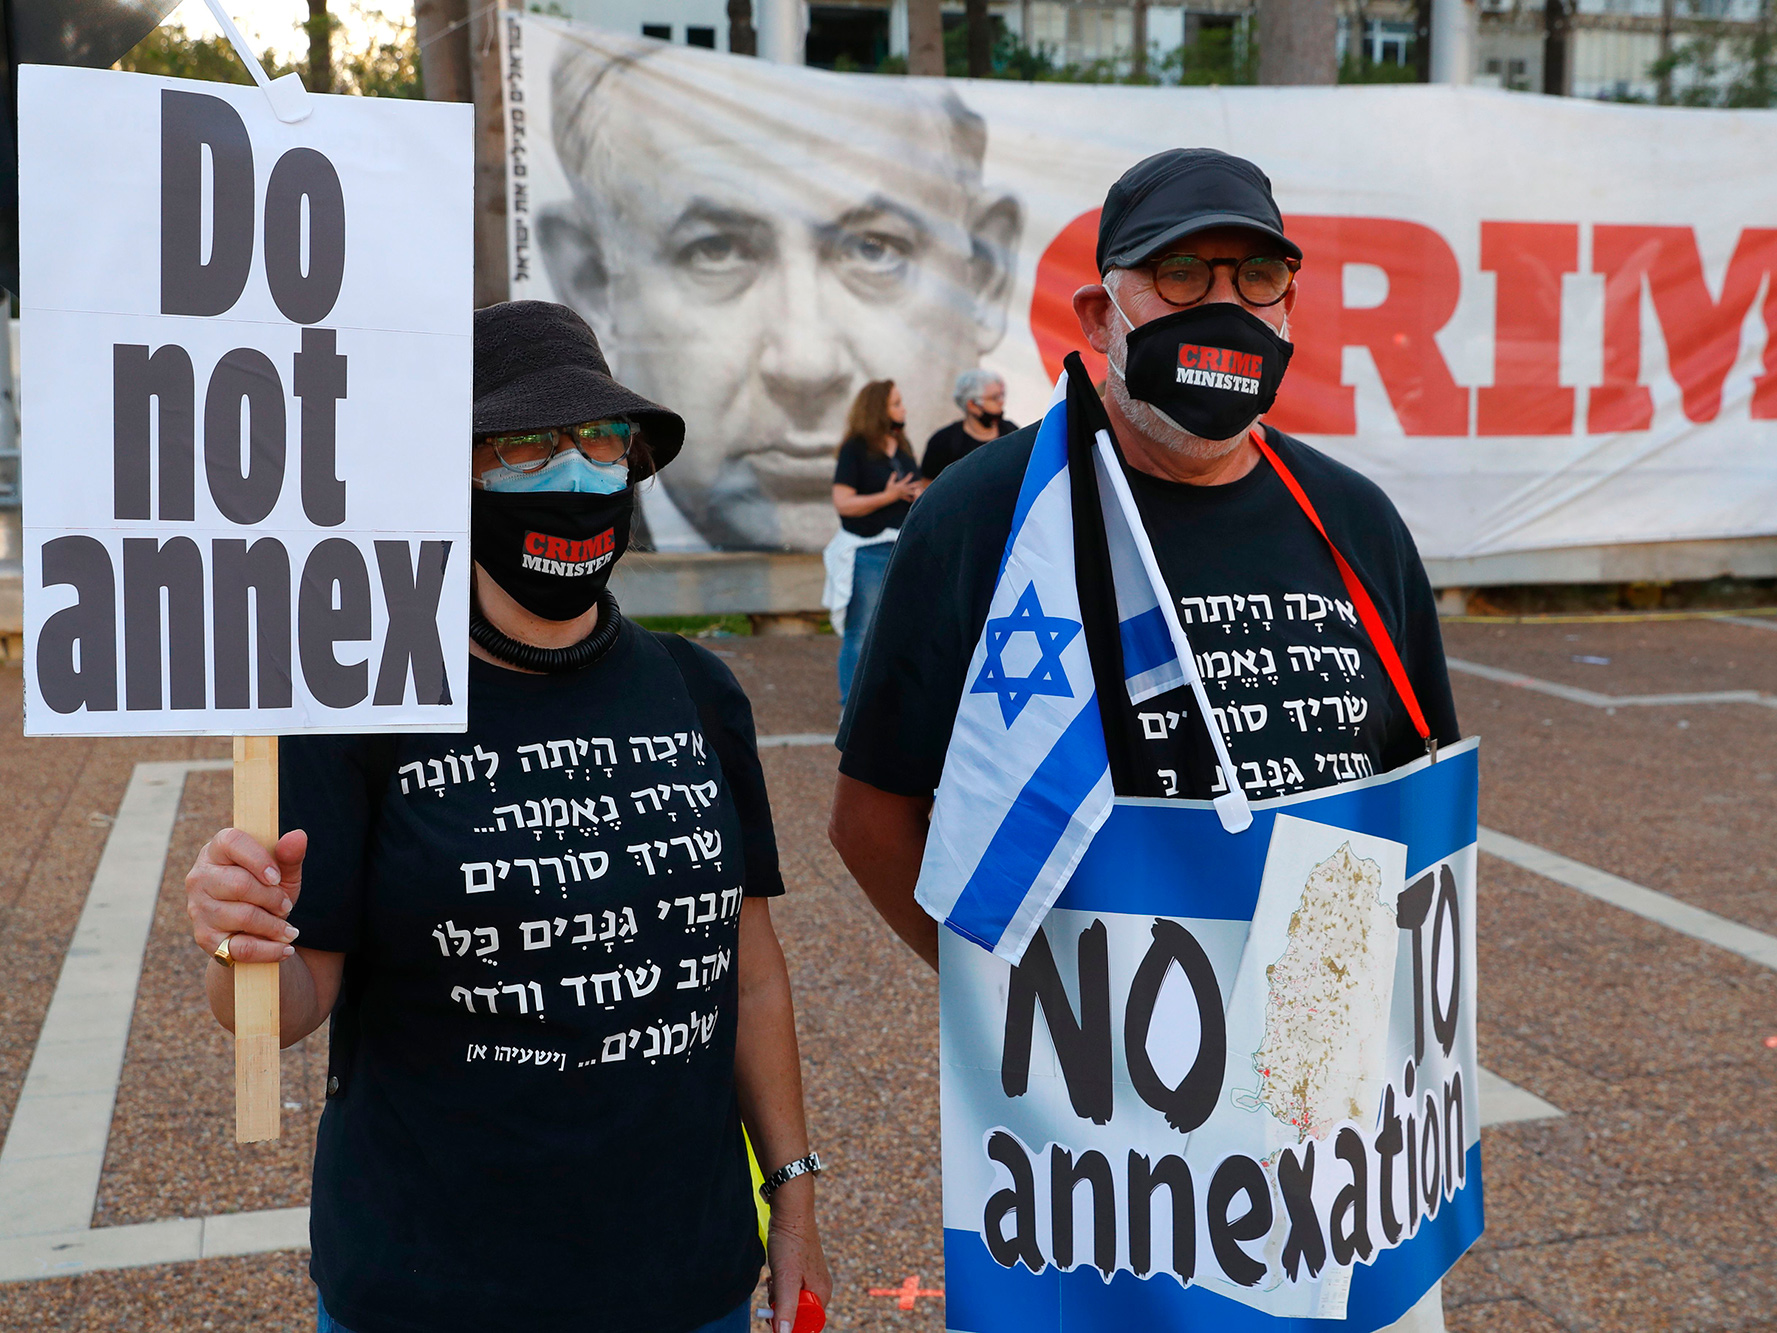 Protesters demonstrating against Israel's West Bank annexation plans, in Tel Aviv, on June 6.